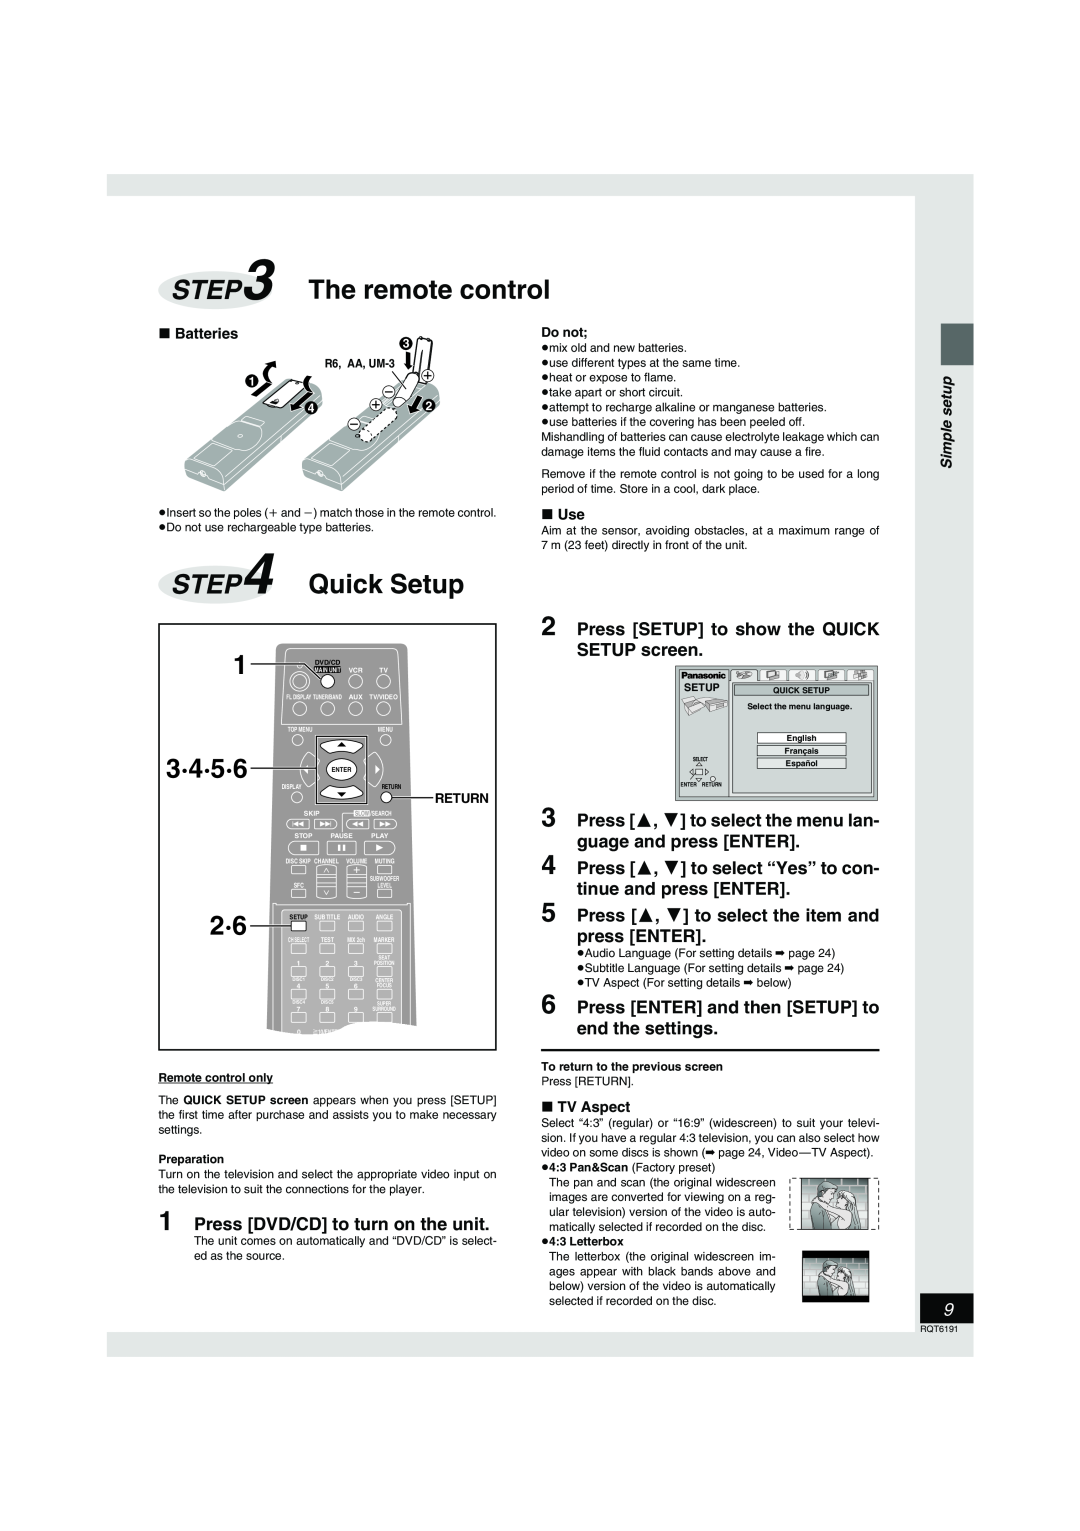 Panasonic SC-HT67 The remote control, Quick Setup, Press DVD/CD to turn on the unit, 3·4·5·6, Simple setup, Do not, Return 